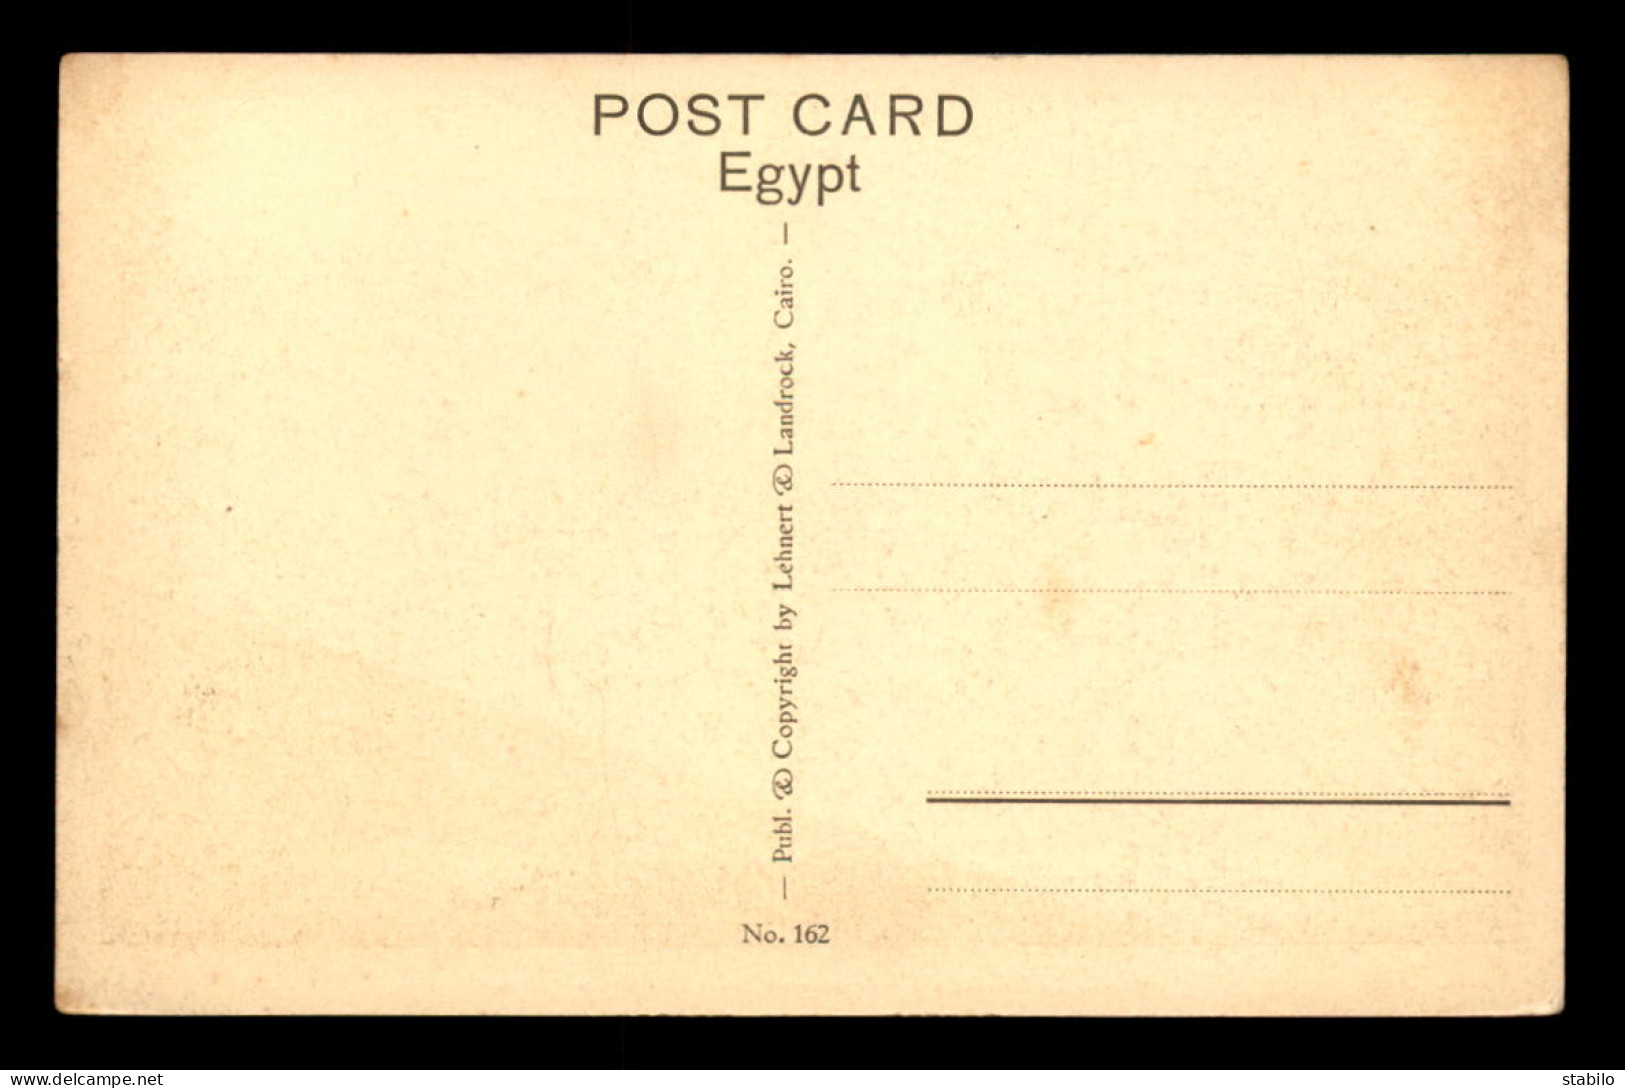 EGYPTE - LENHERT & LANDROCK N°162 - SUEZ - EASTERN TELEGRAPH AND HALIM STREET - Sues